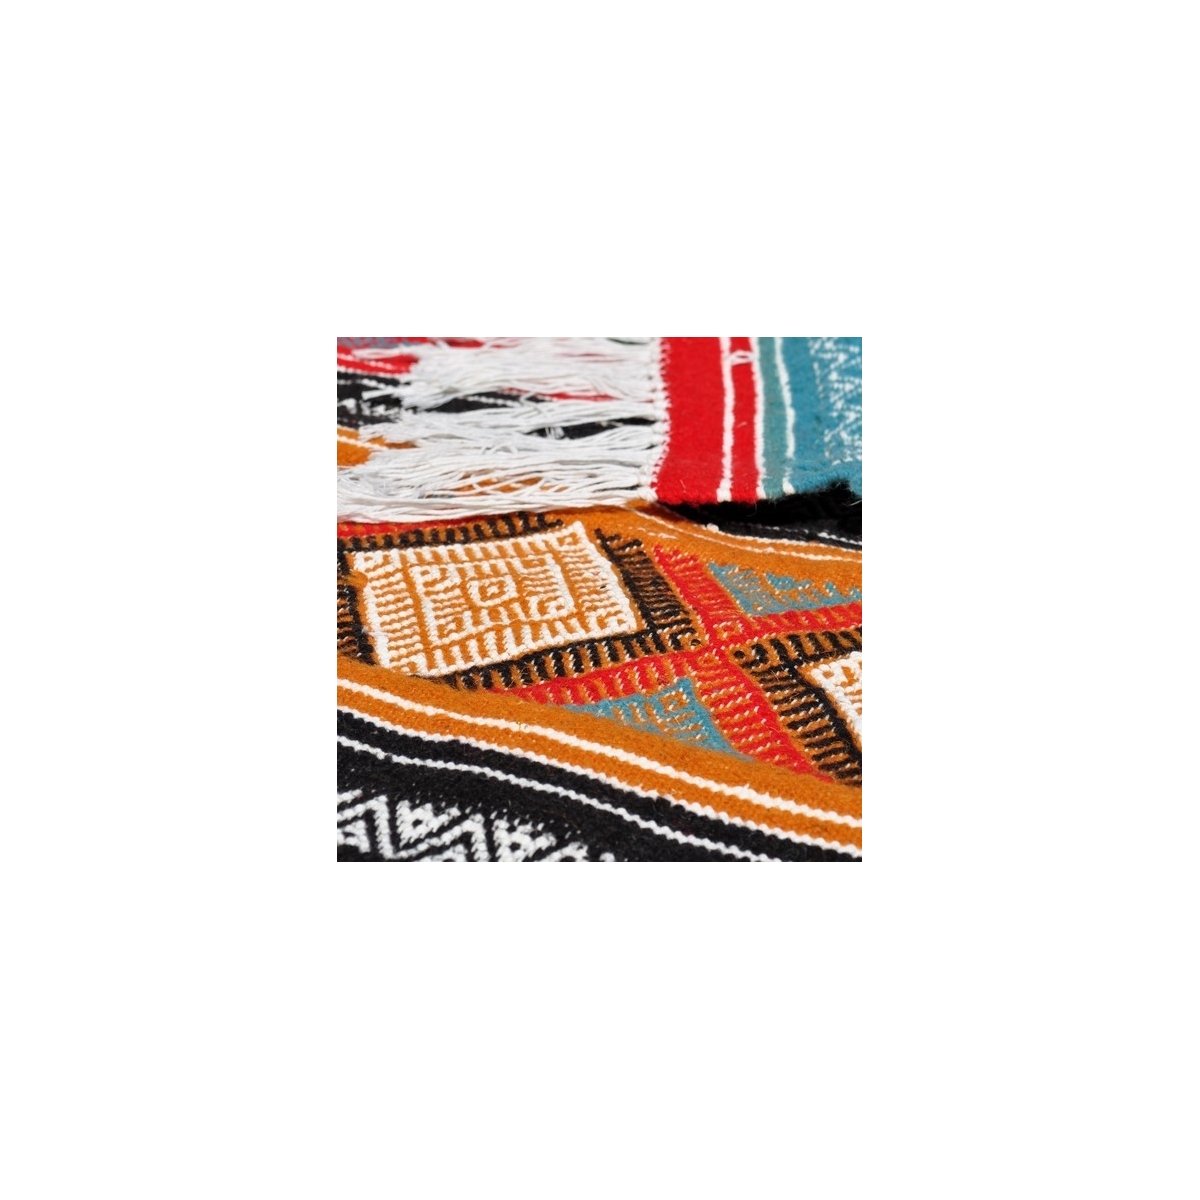 Berber tapijt Tapijt Kilim lang Kesra 65x205 Veelkleurig (Handgeweven, Wol, Tunesië) Tunesisch kilimdeken, Marokkaanse stijl. Re